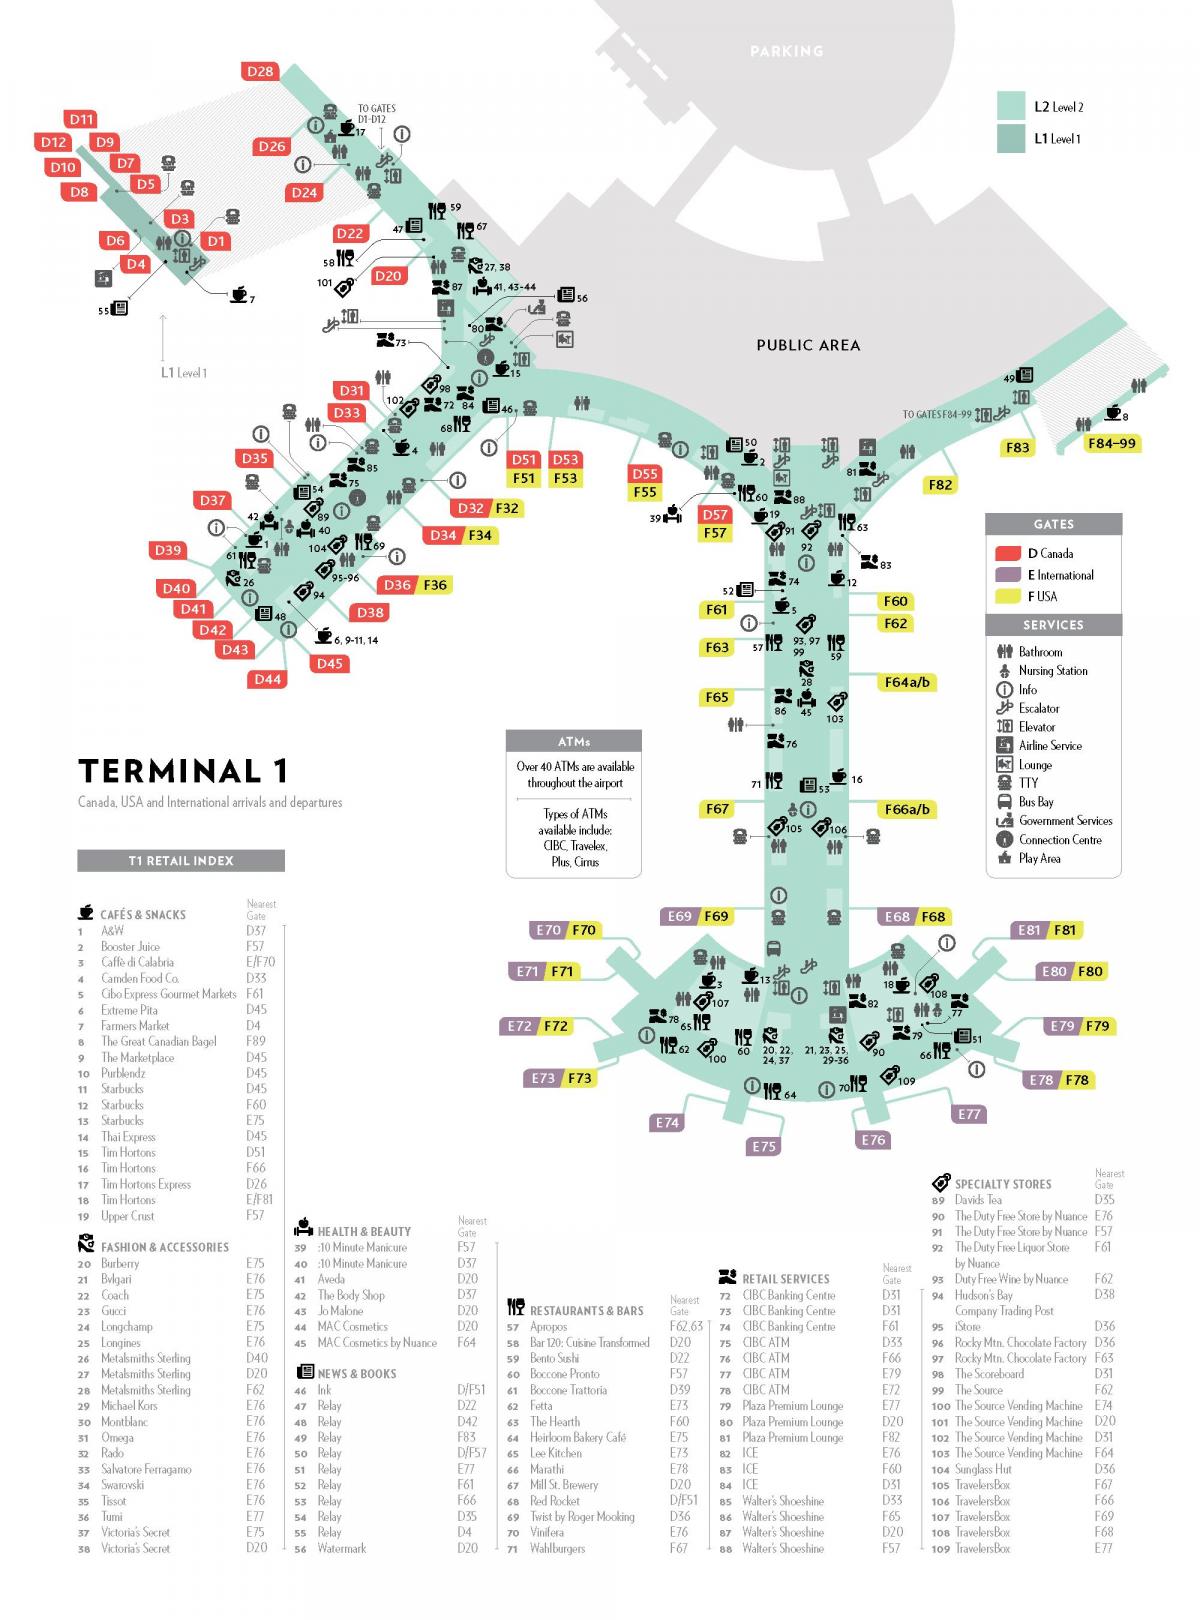 pearson terminálu 1 mapa